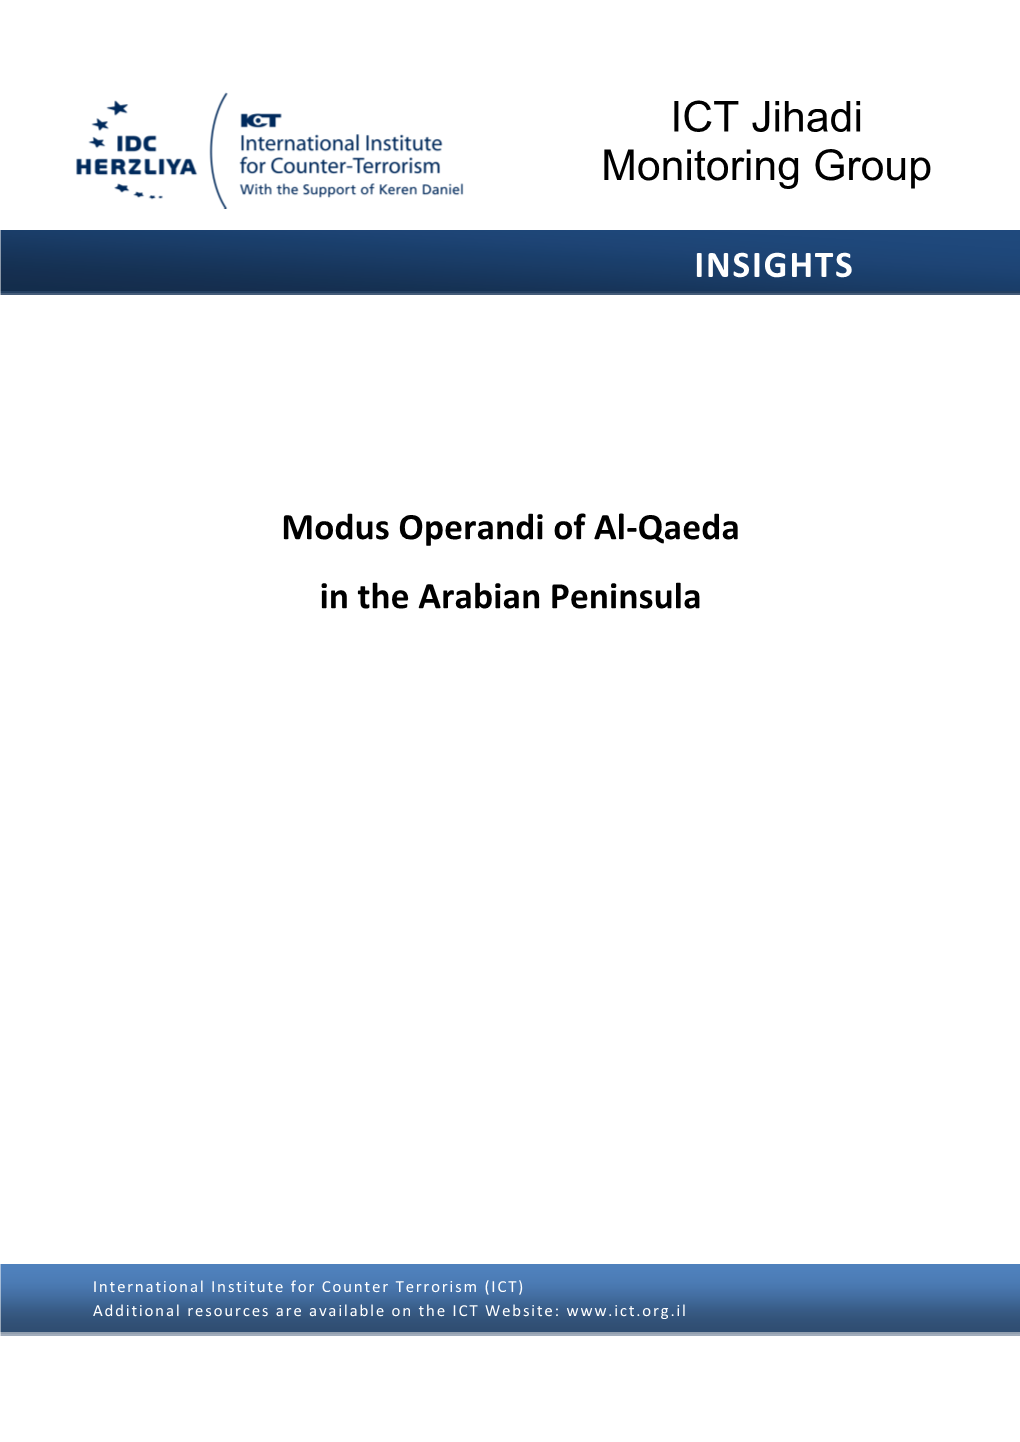 Modus Operandi of Al-Qaeda in the Arabian Peninsula